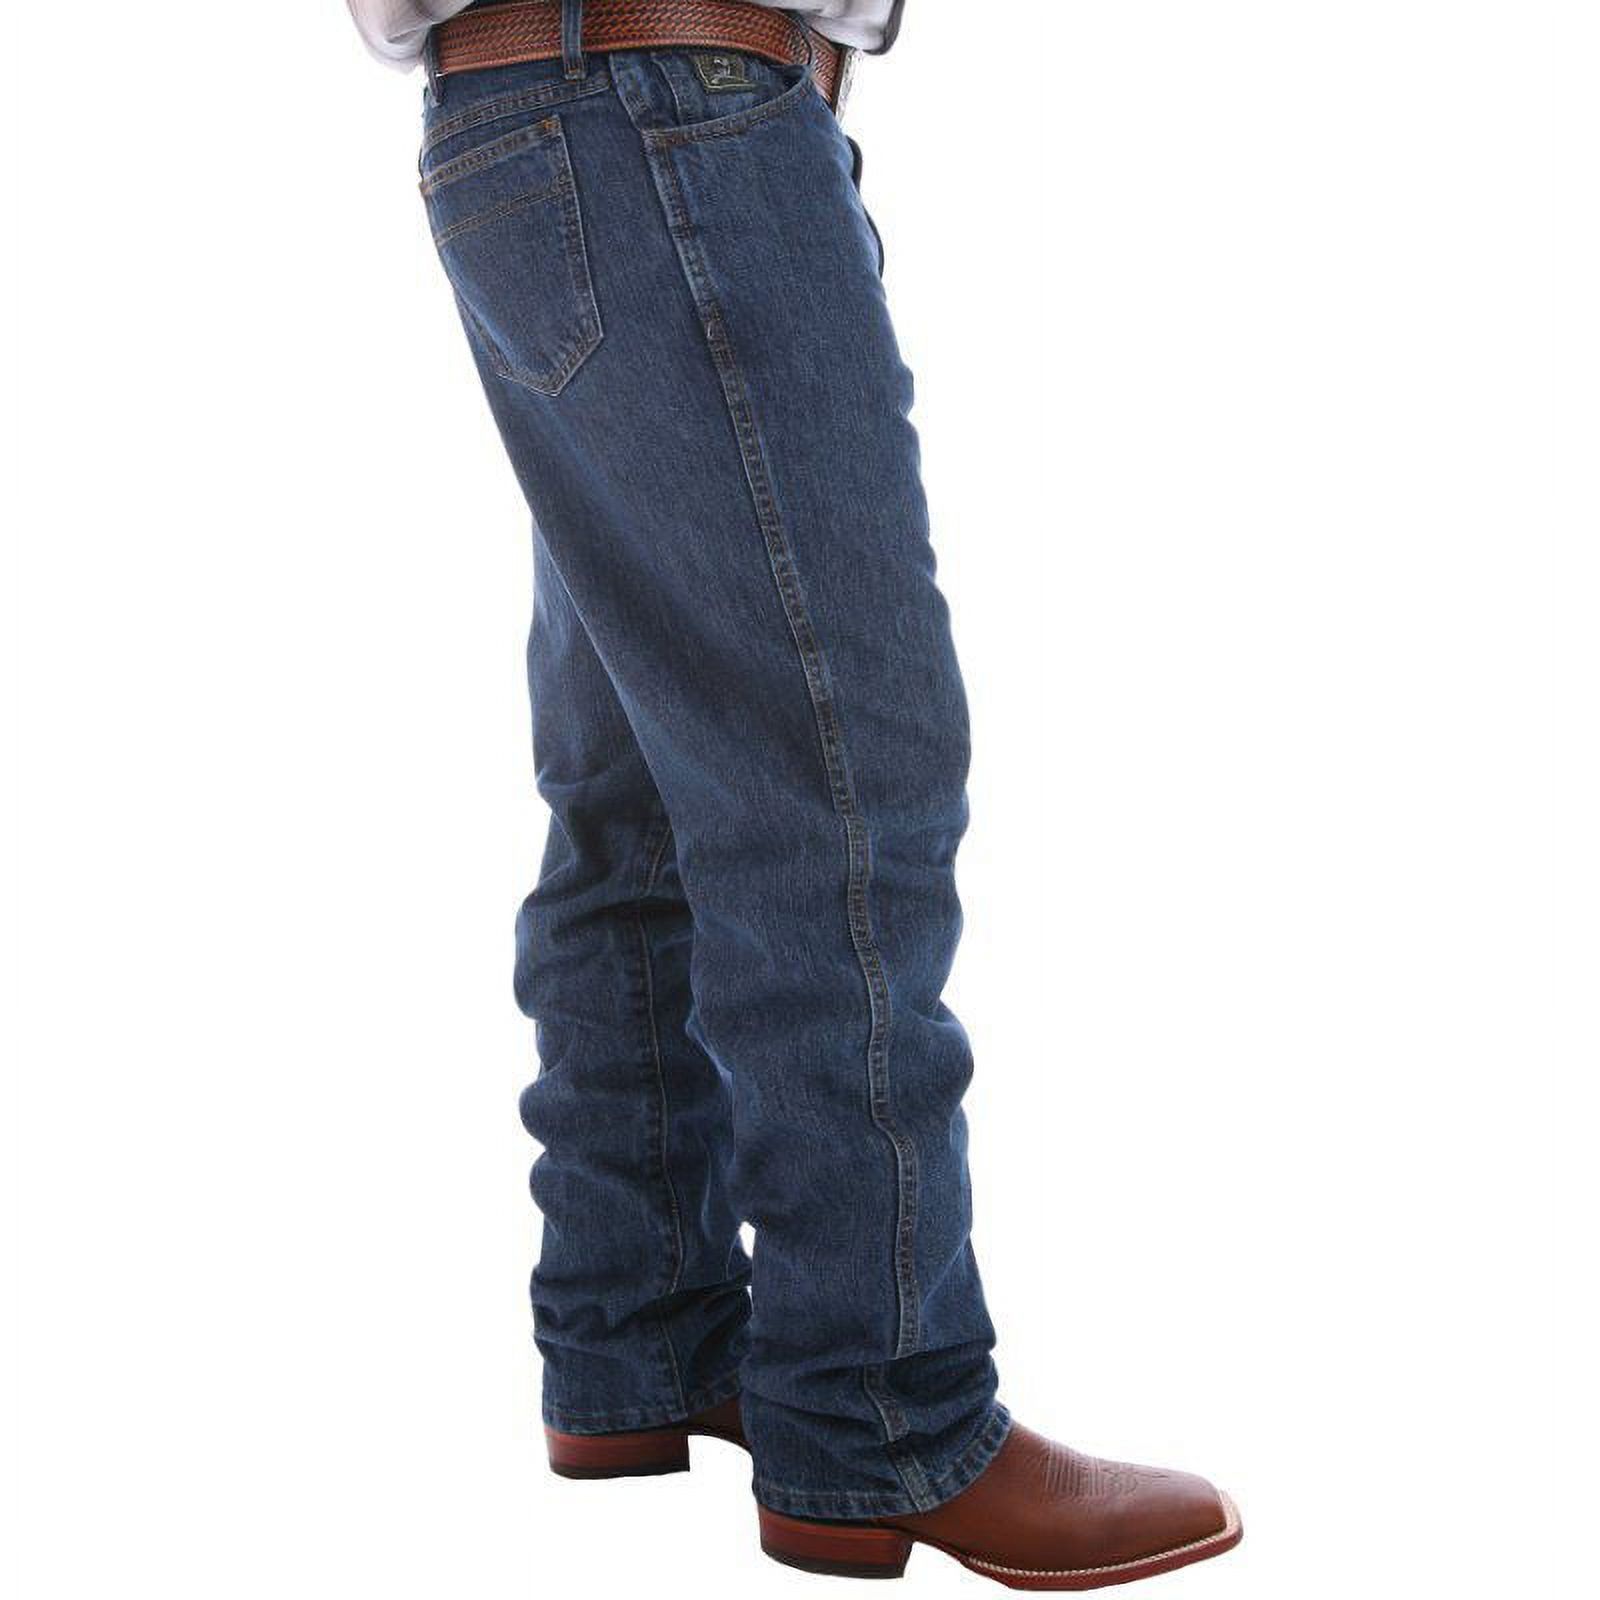 Cinch Apparel Mens Green Label Original Fit Jeans 33W x 40L Dark Stonewash - image 2 of 4